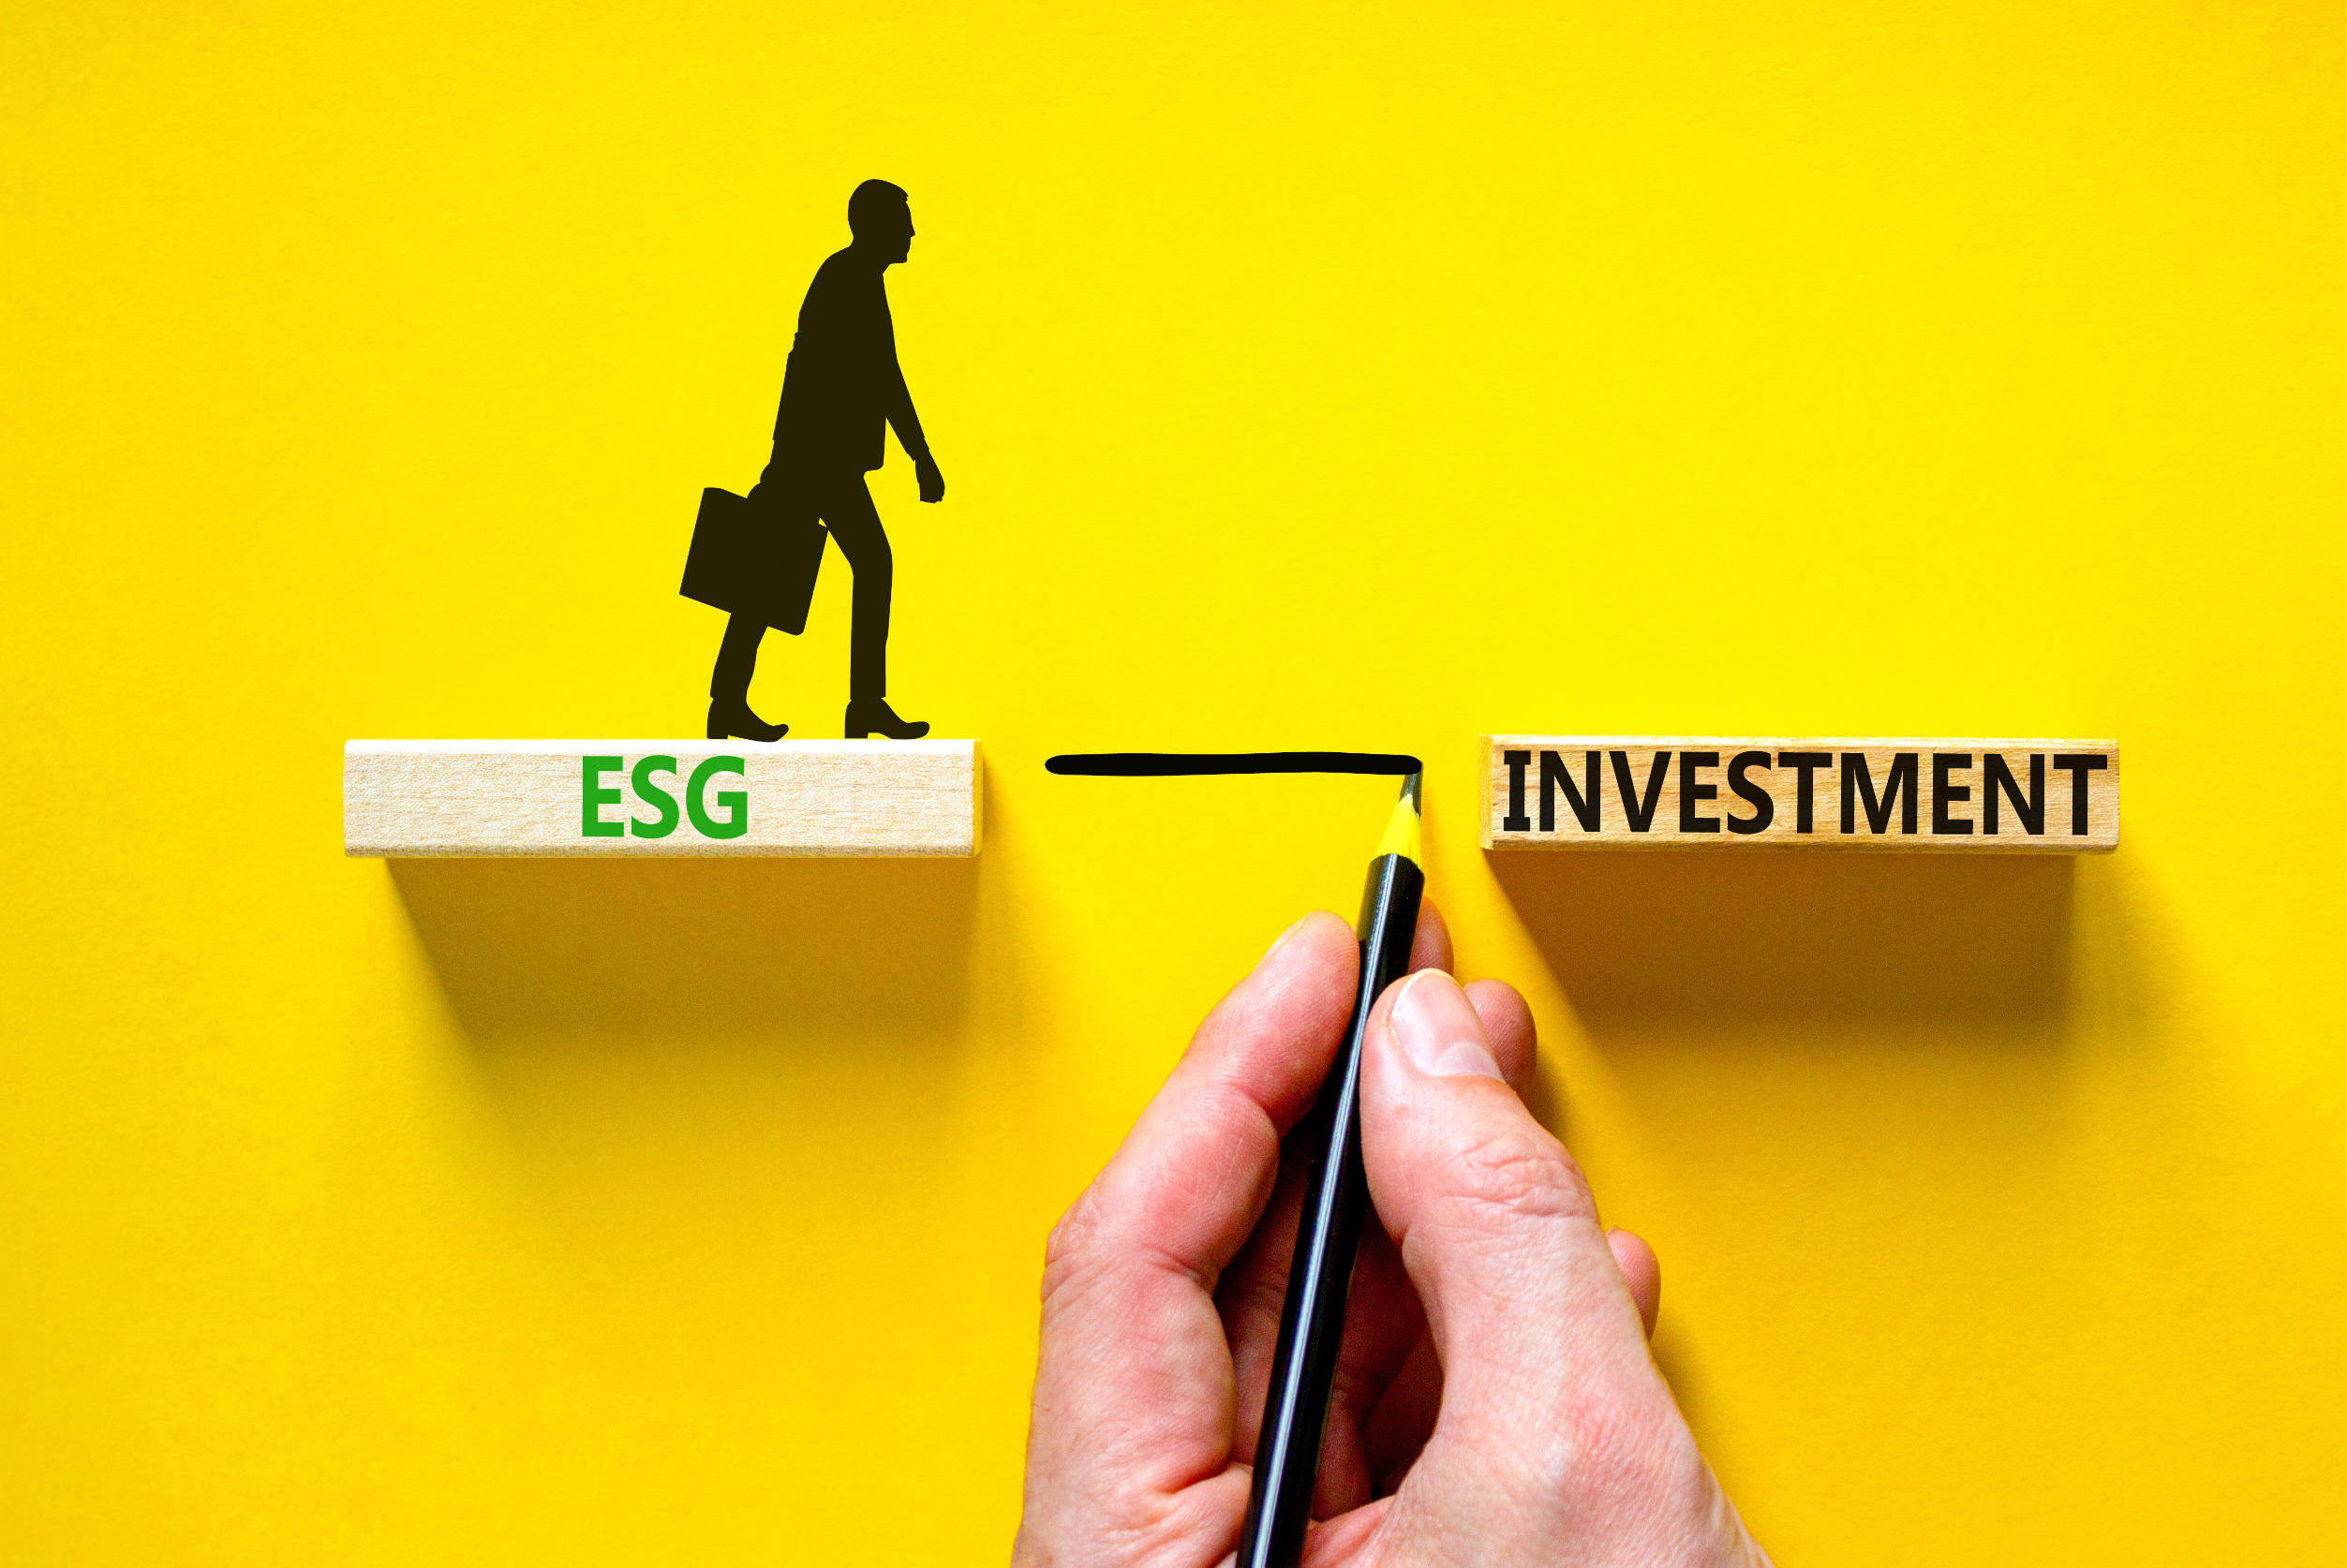 ESG Investment businessman